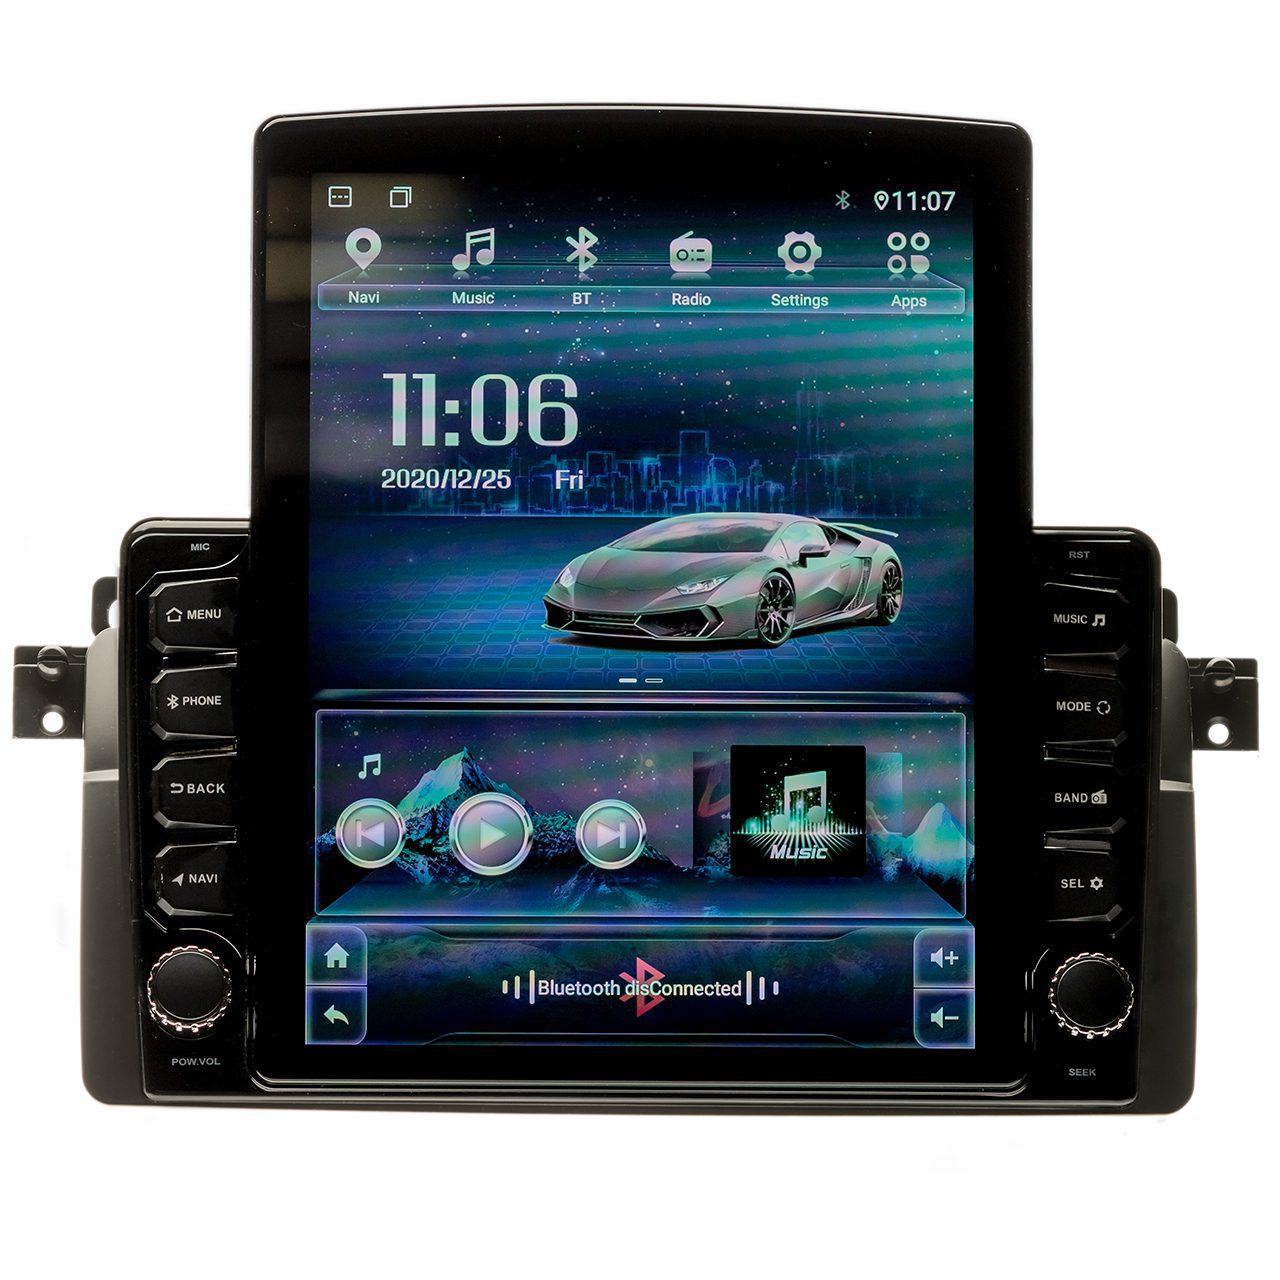 Navigatie AUTONAV Android GPS Dedicata BMW E46, Model XPERT Memorie 64GB Stocare, 4GB DDR3 RAM, Butoane Si Volum Fizice, Display Vertical Stil Tesla 10